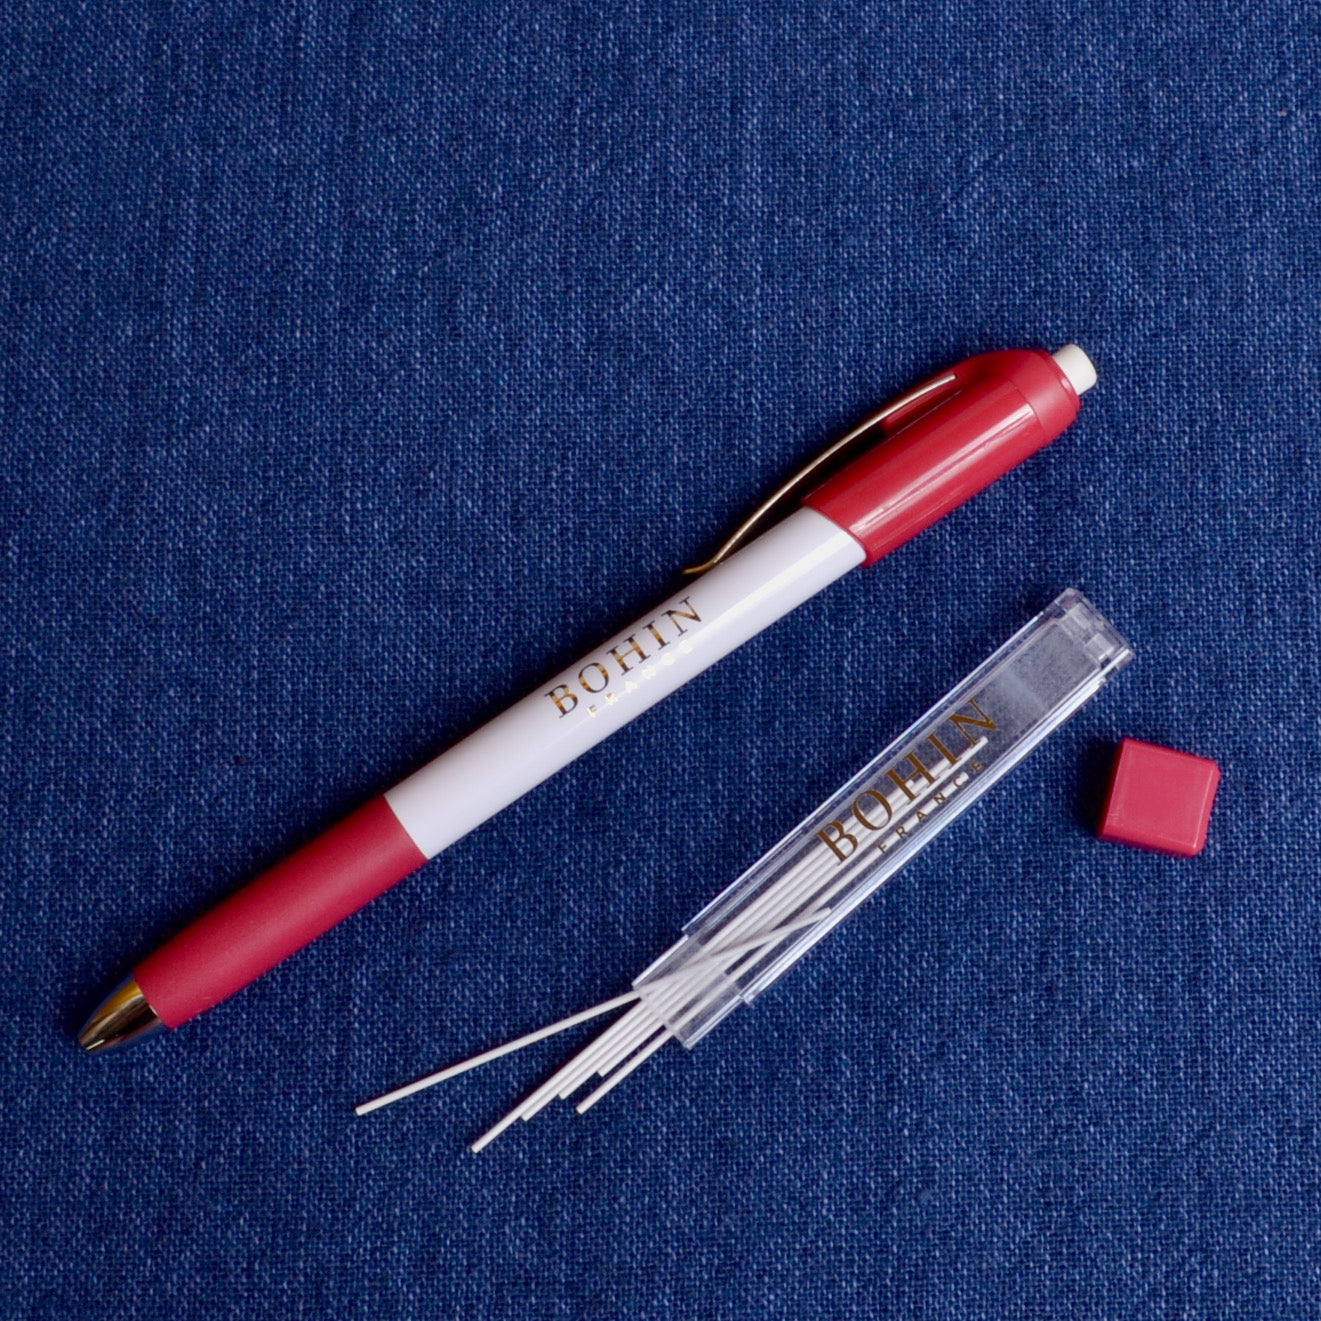 Bohin Mechanical Fabric Pencil with Refills - A Threaded Needle